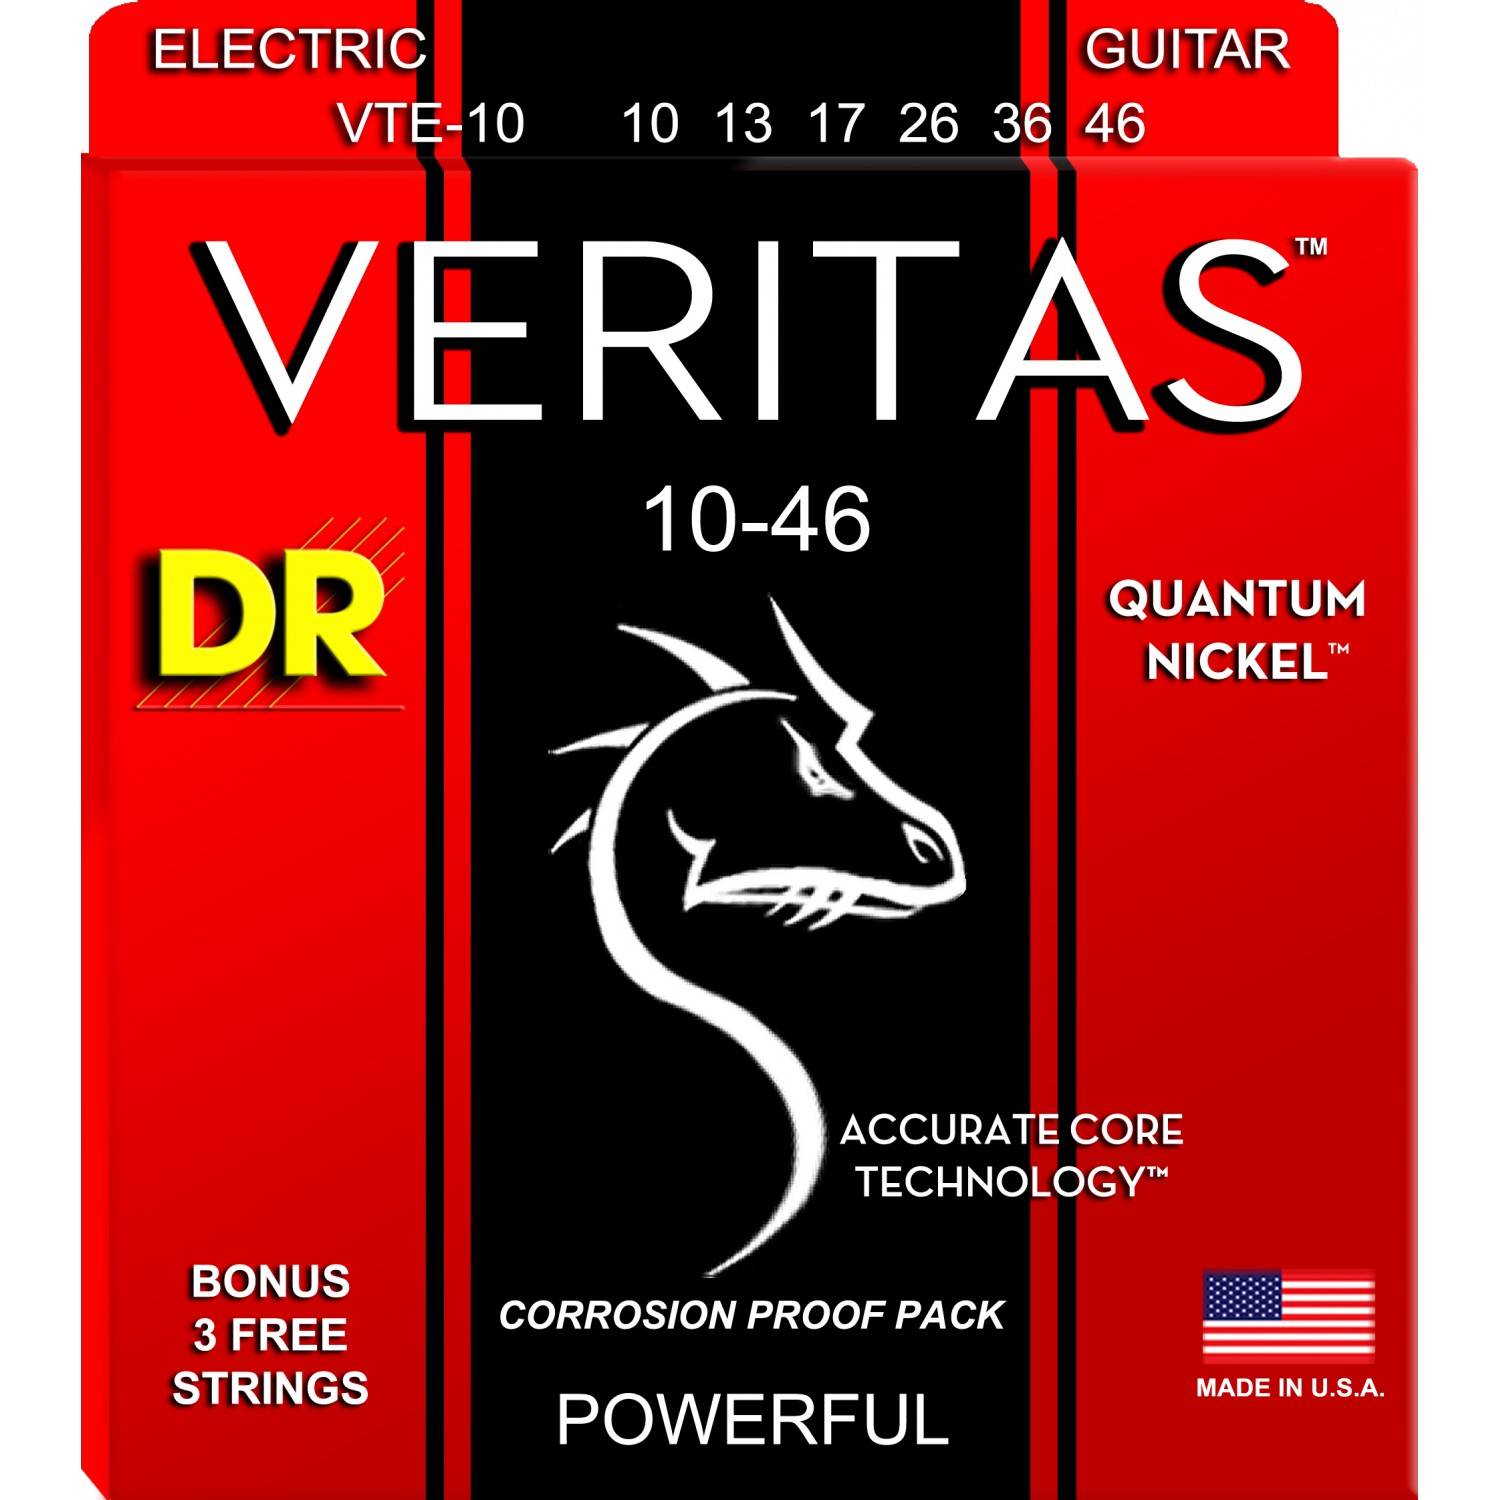 DR VERITAS Quantum Nickel - VTE-10 - struny do gitary elektrycznej Set, Medium, .010-.046